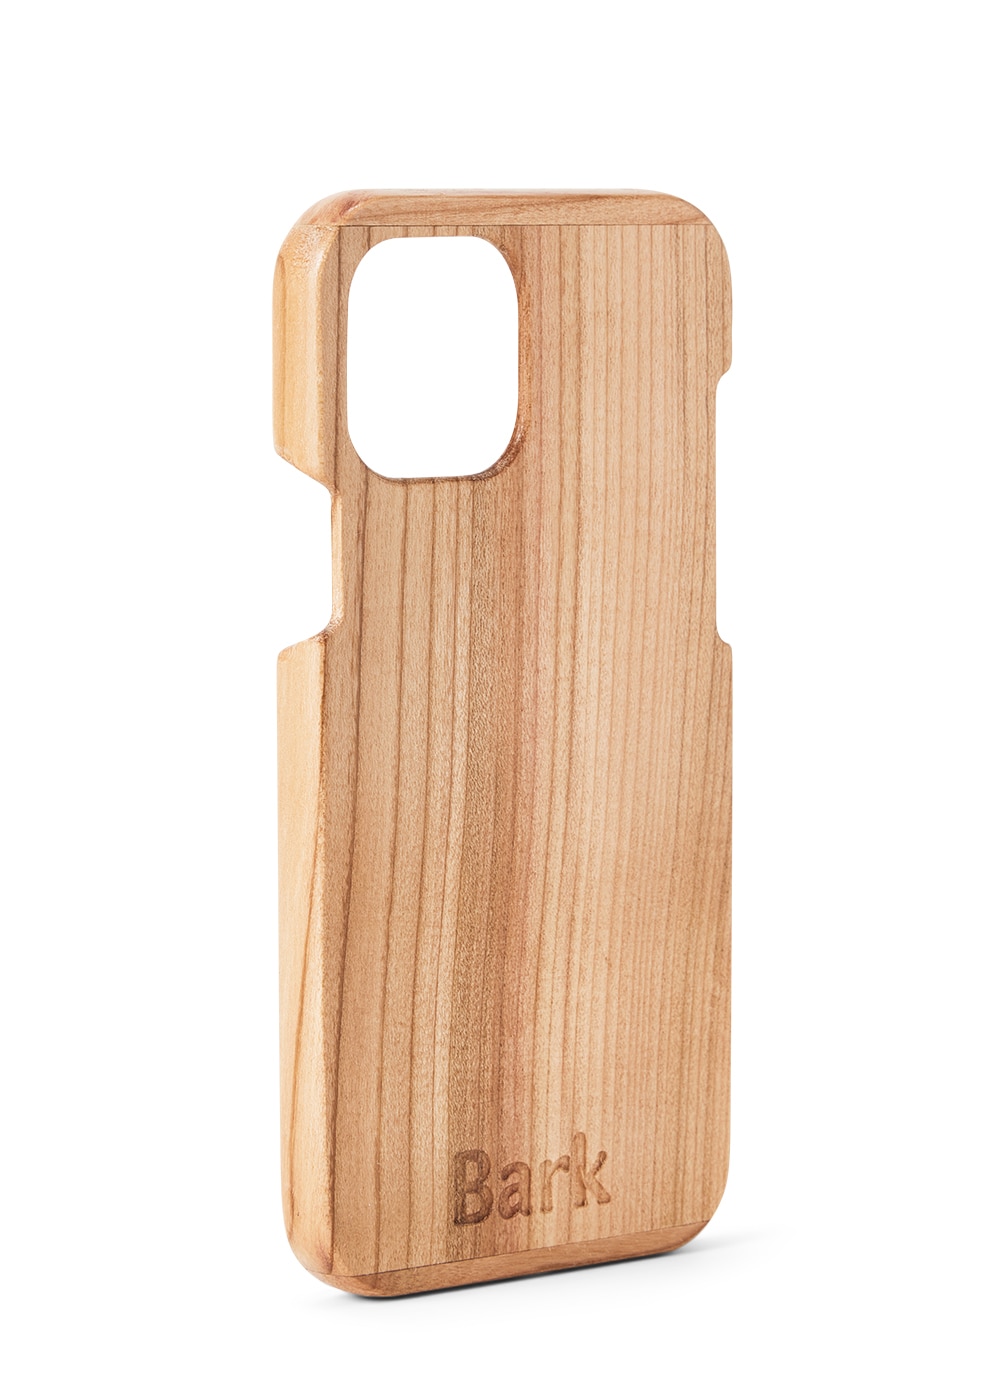 iPhone 12 case made of Swedish hardwood - Körsbär